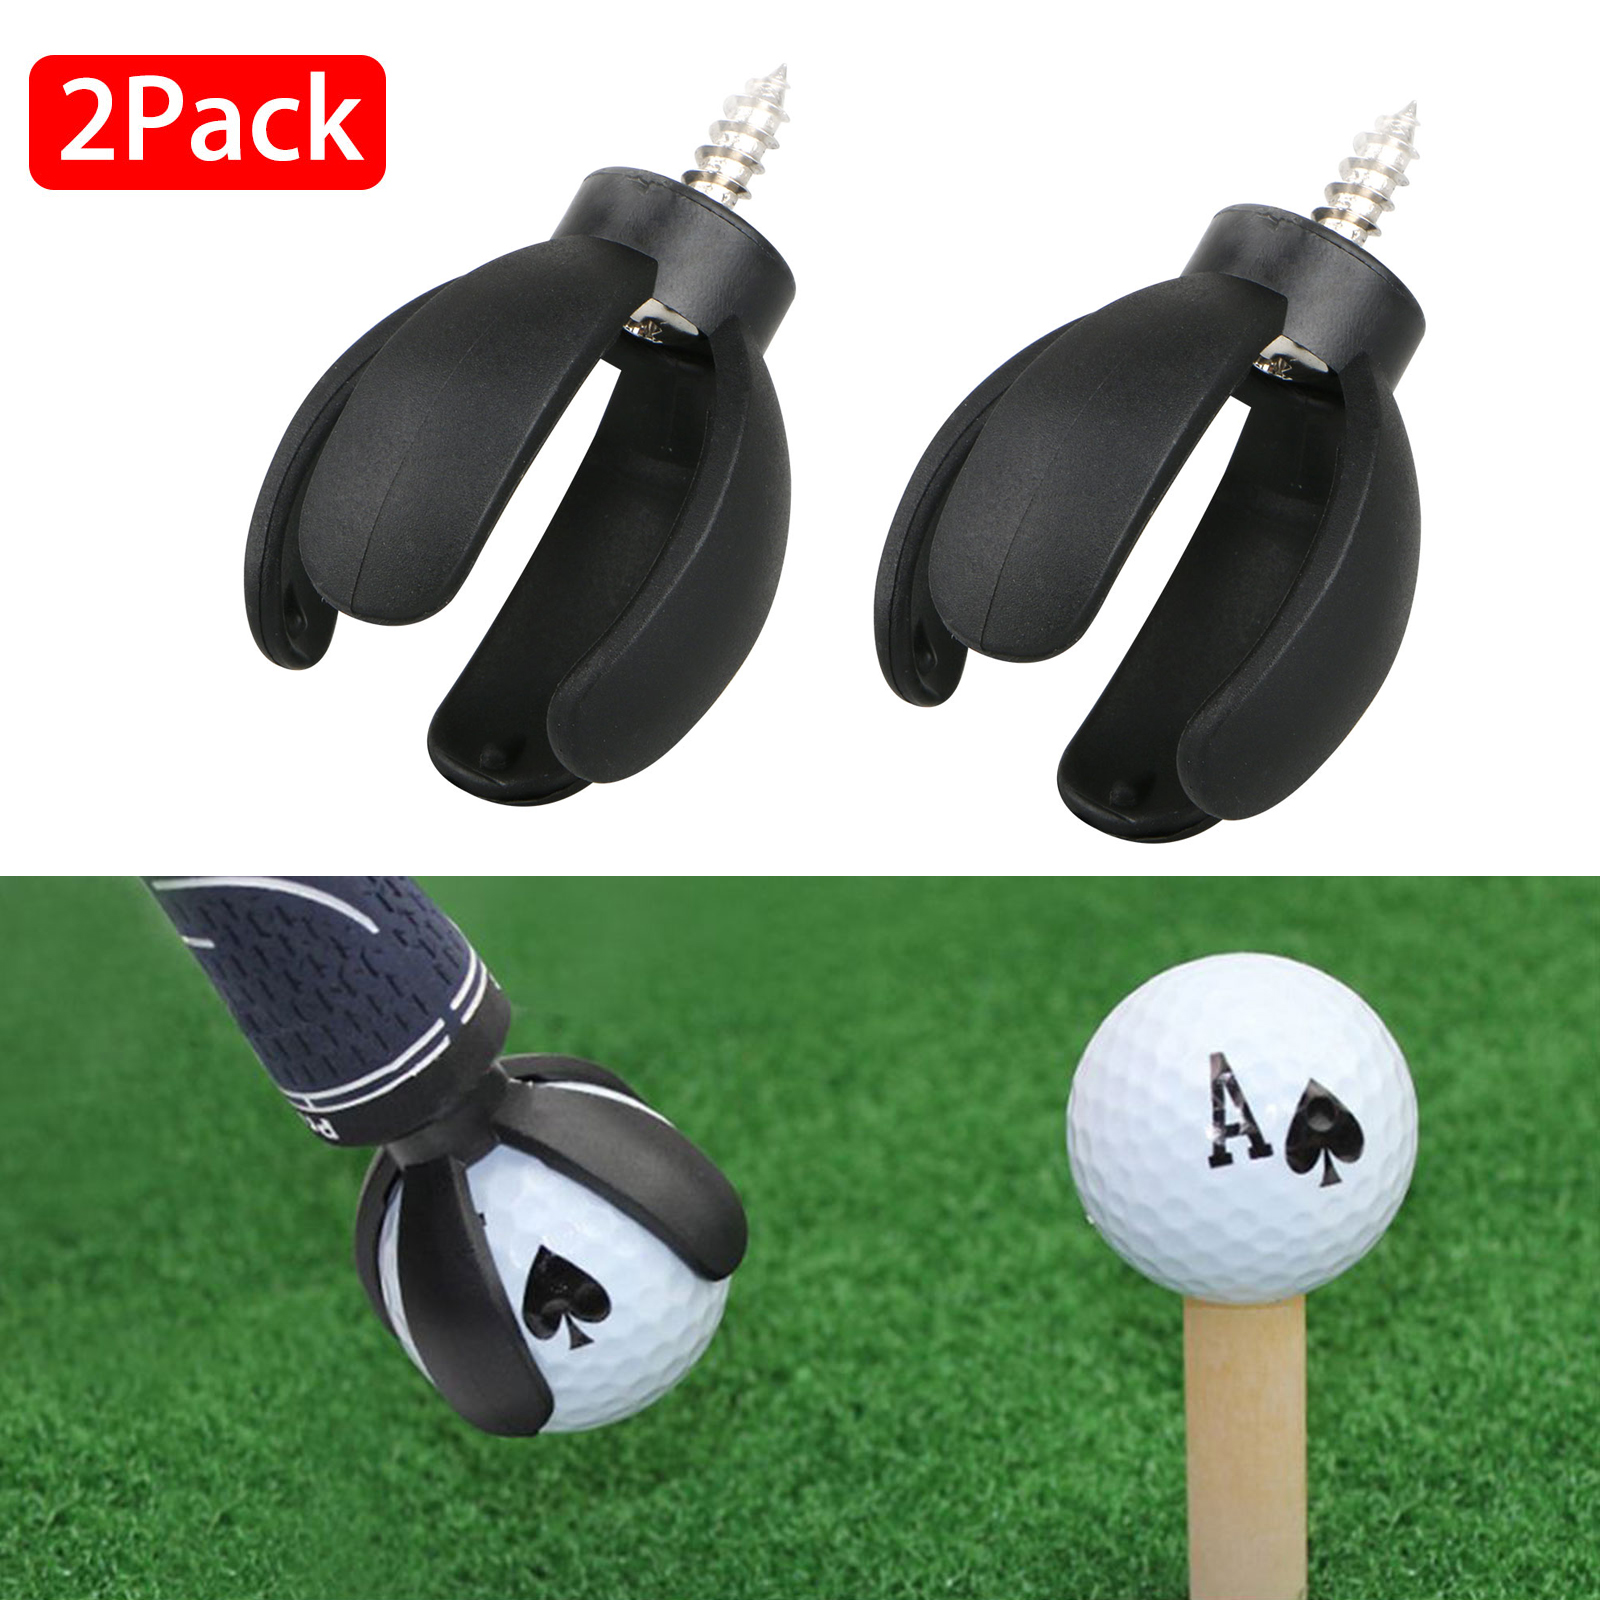 2x 4-Prong Golf Ball Pick Up Retriever Grabber Claw Sucker Tool For ...